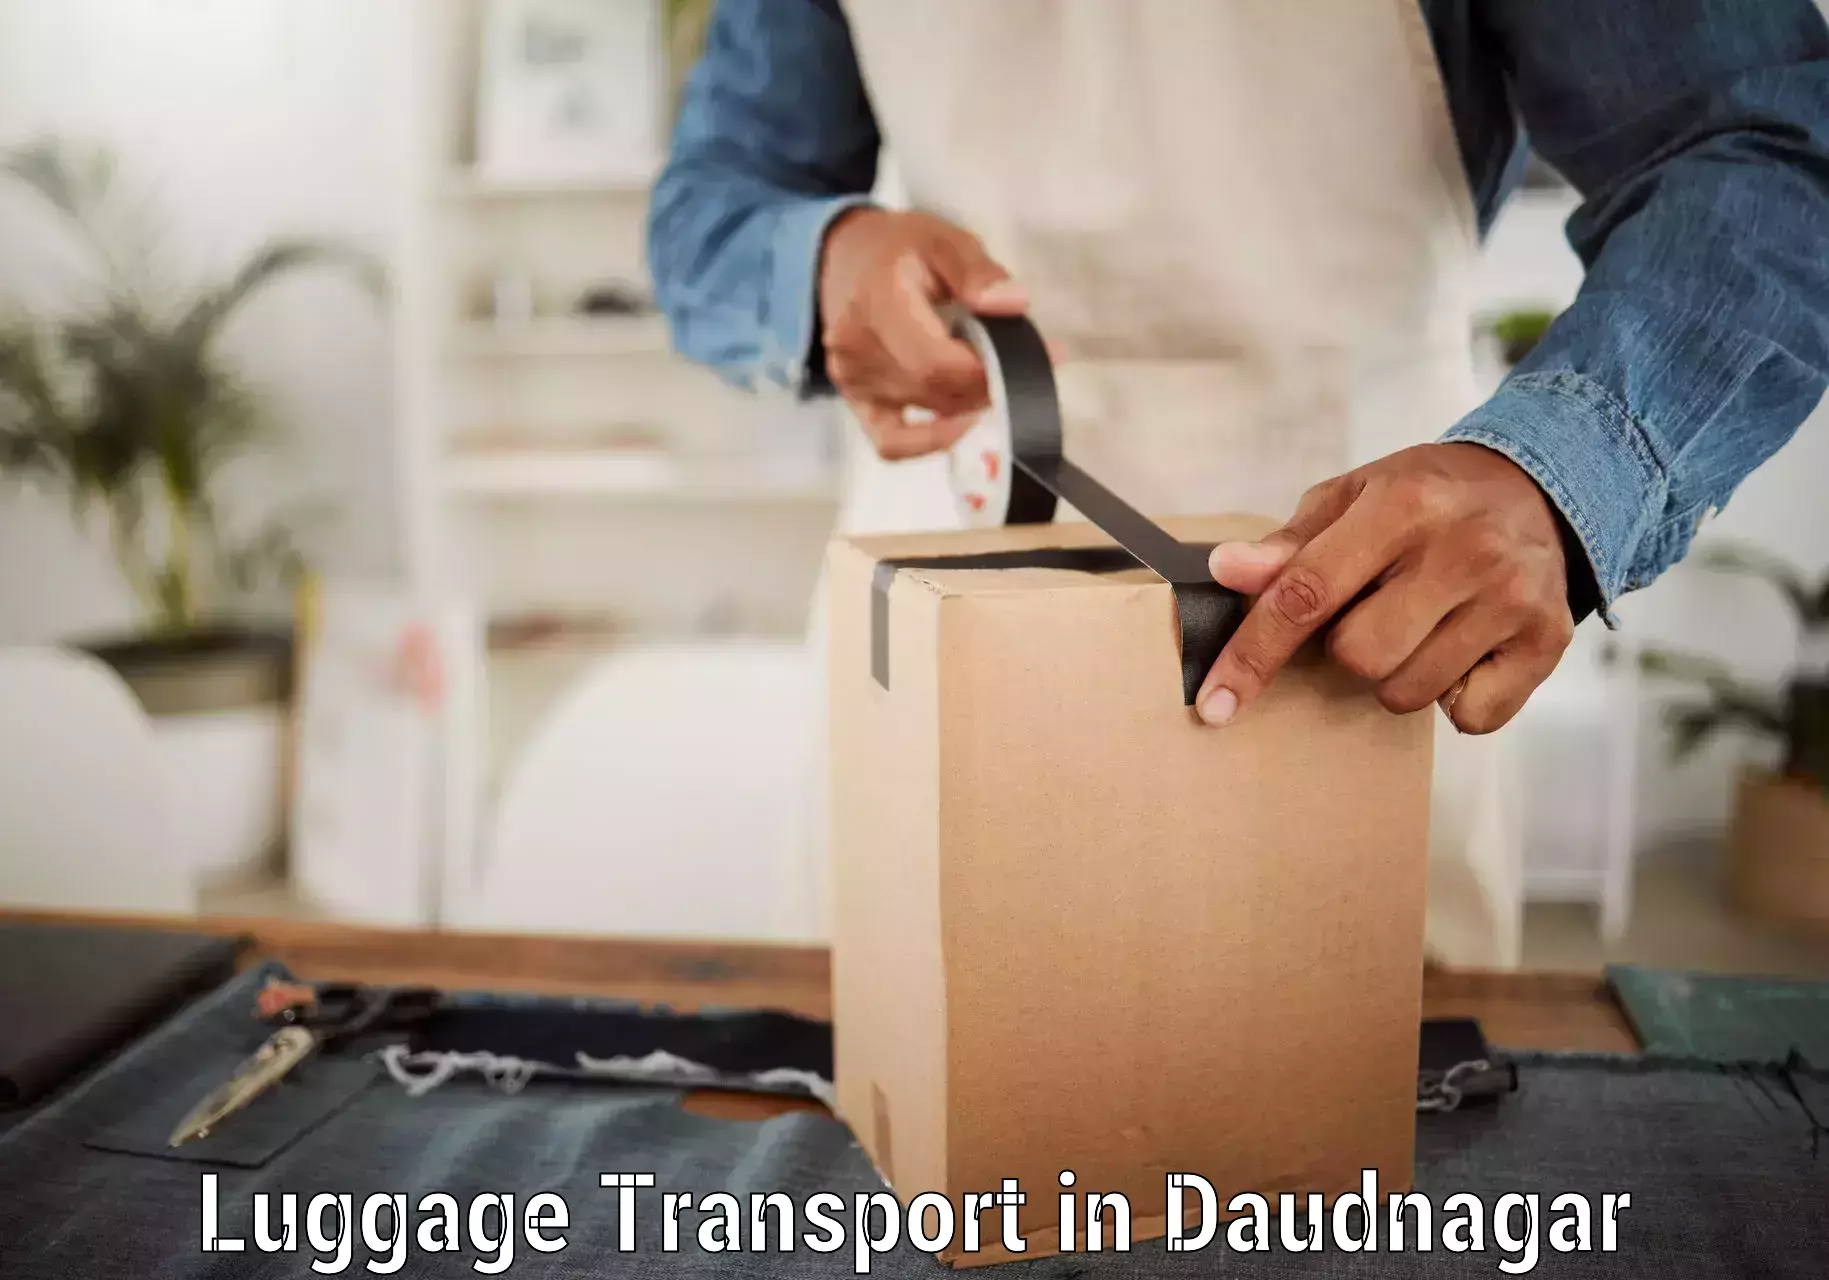 Doorstep luggage collection in Daudnagar